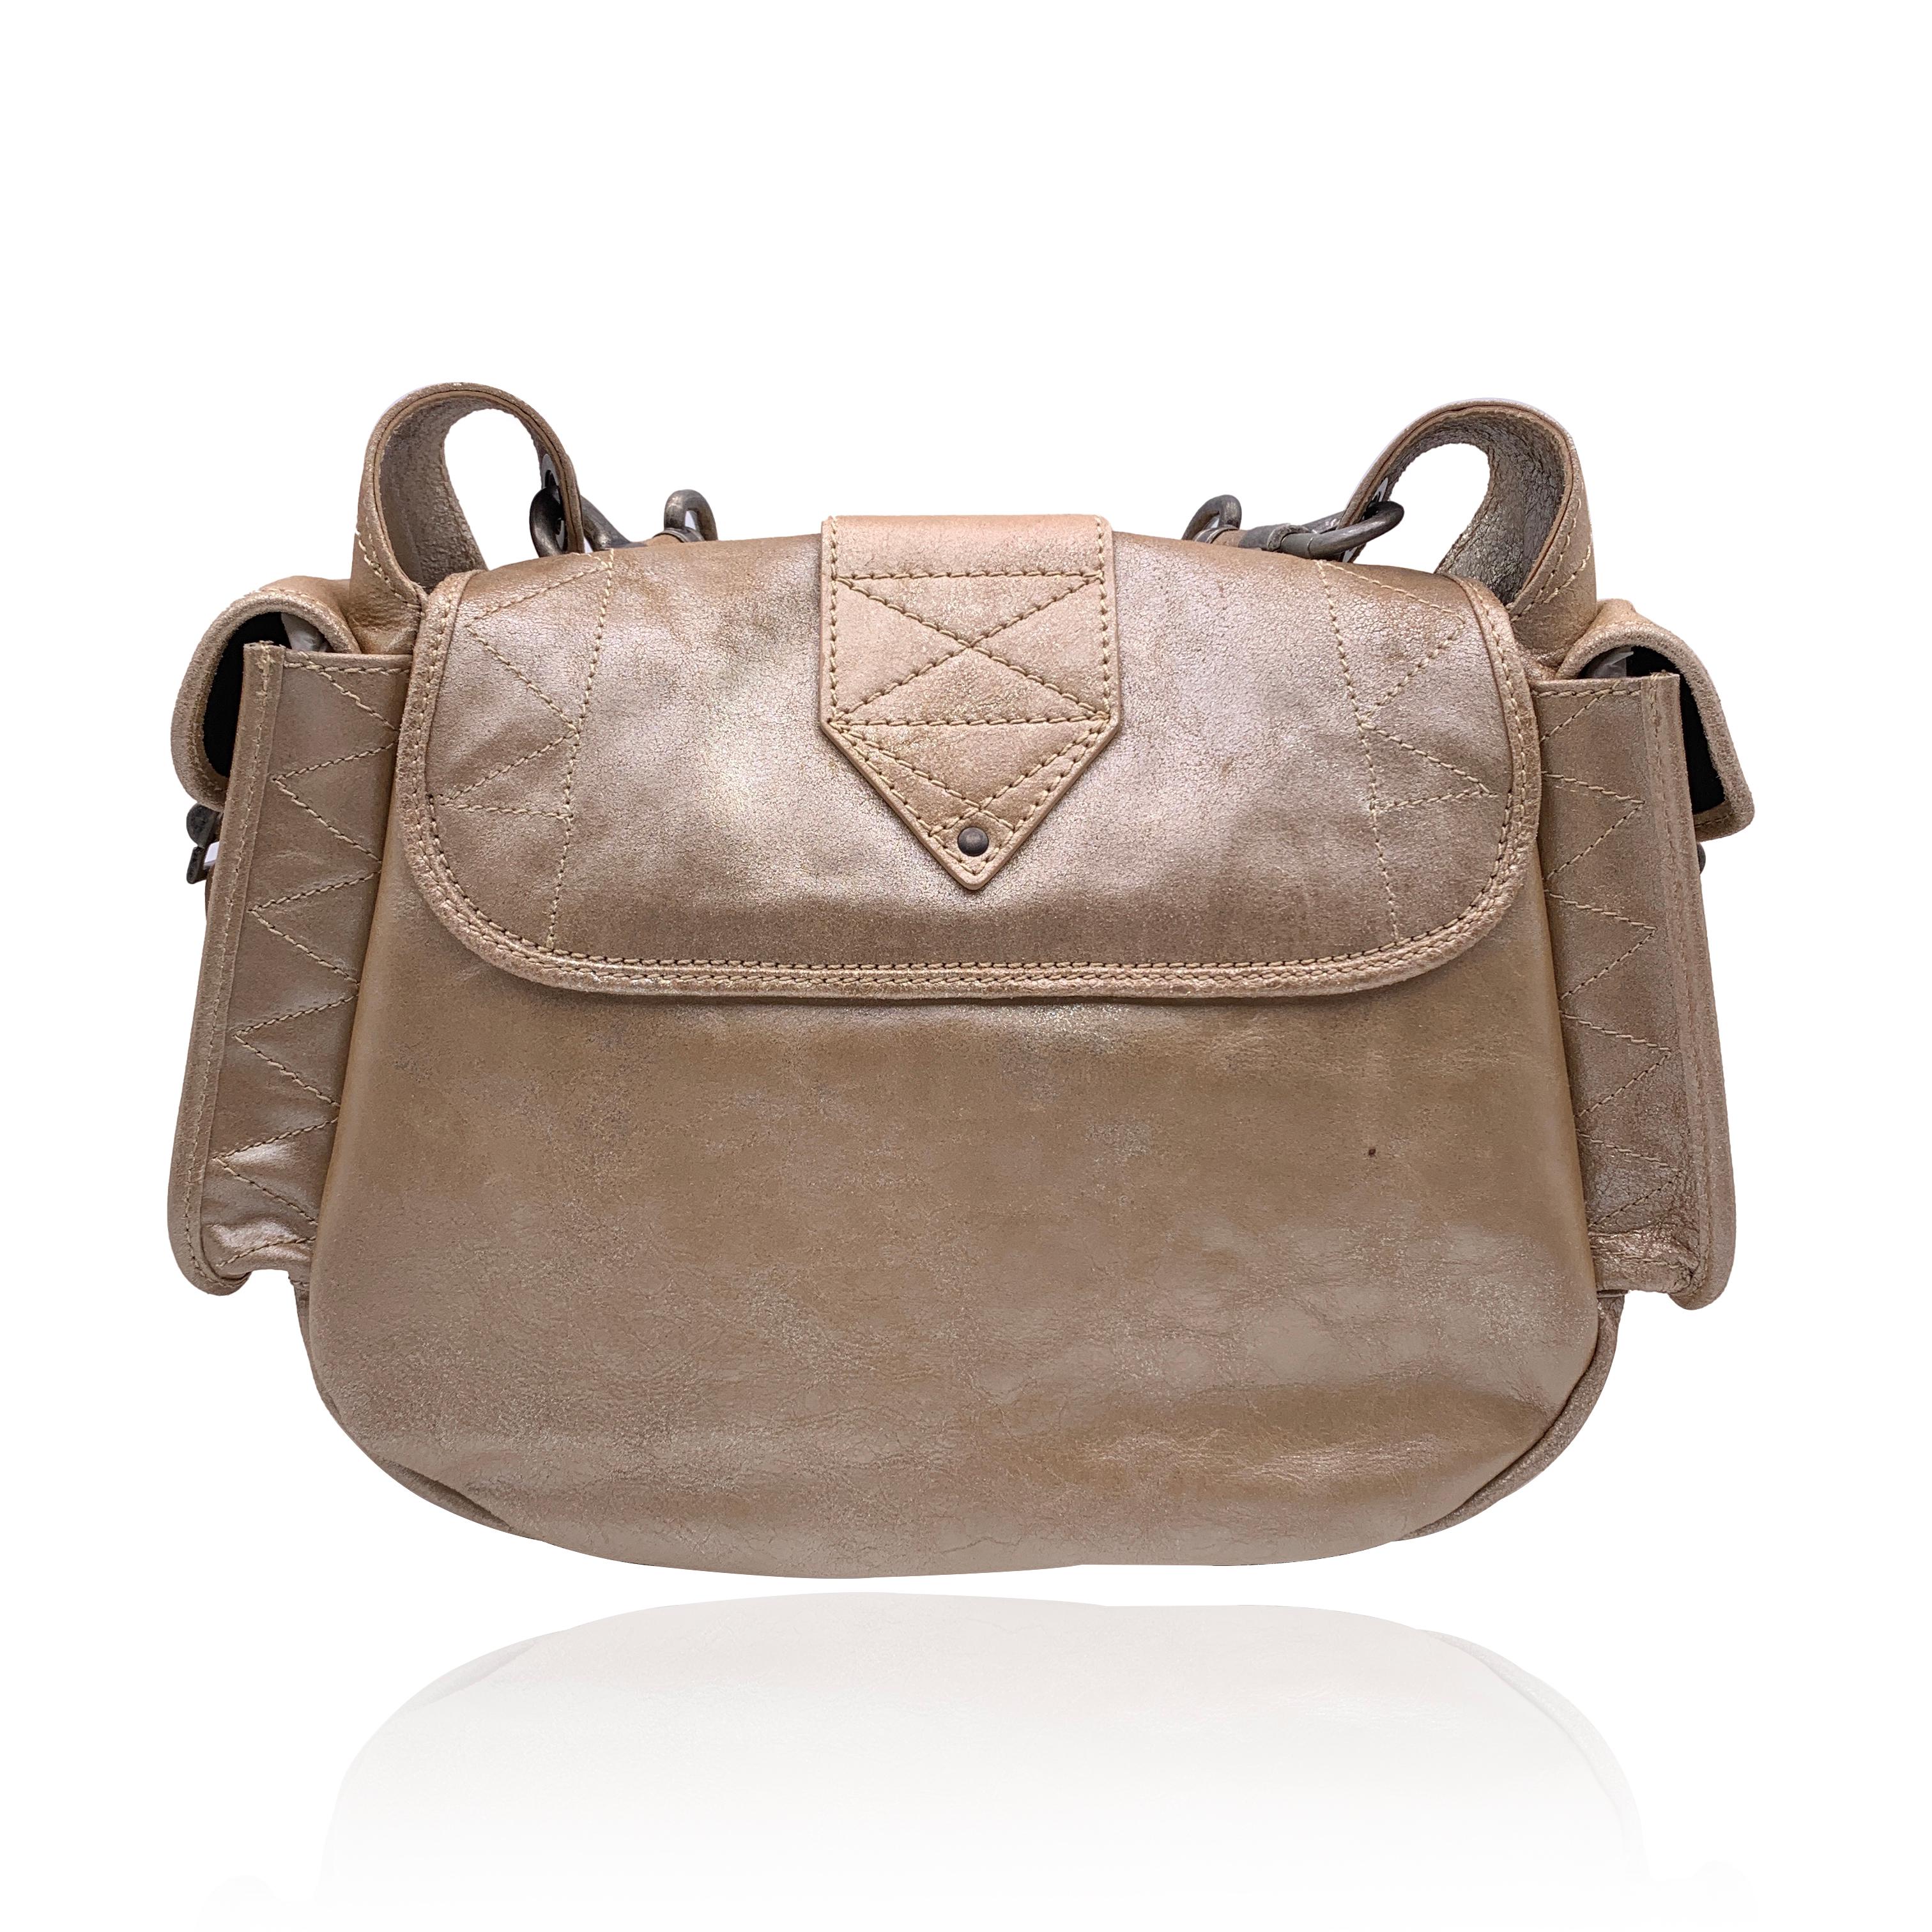 Christian Dior Beige Leather Rebelle Shoulder Bag Handbag In Excellent Condition For Sale In Rome, Rome